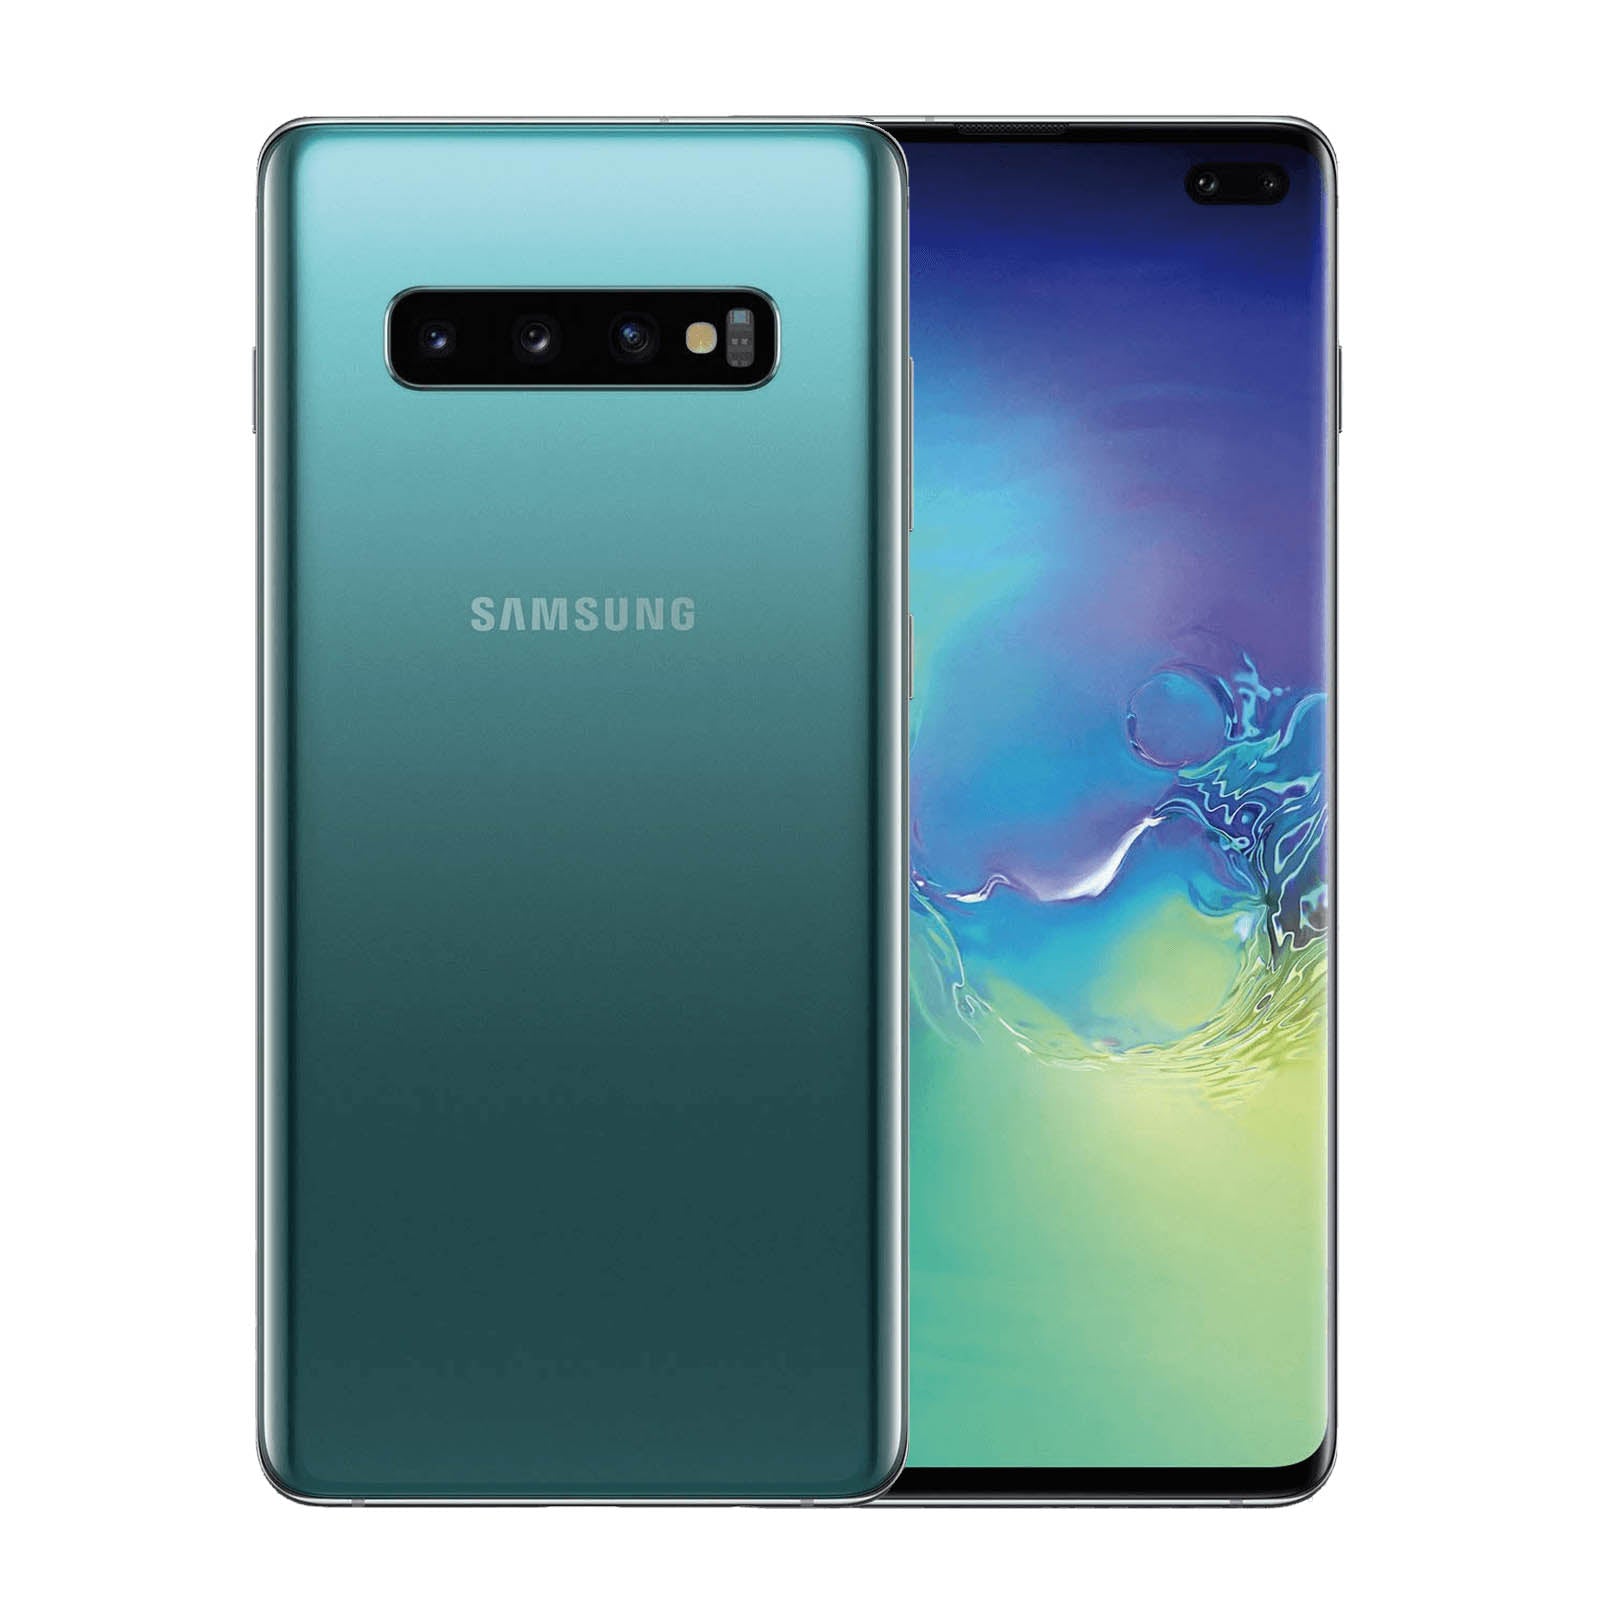 Samsung Galaxy S10 Plus 001TB Prism Green Very good - Unlocked